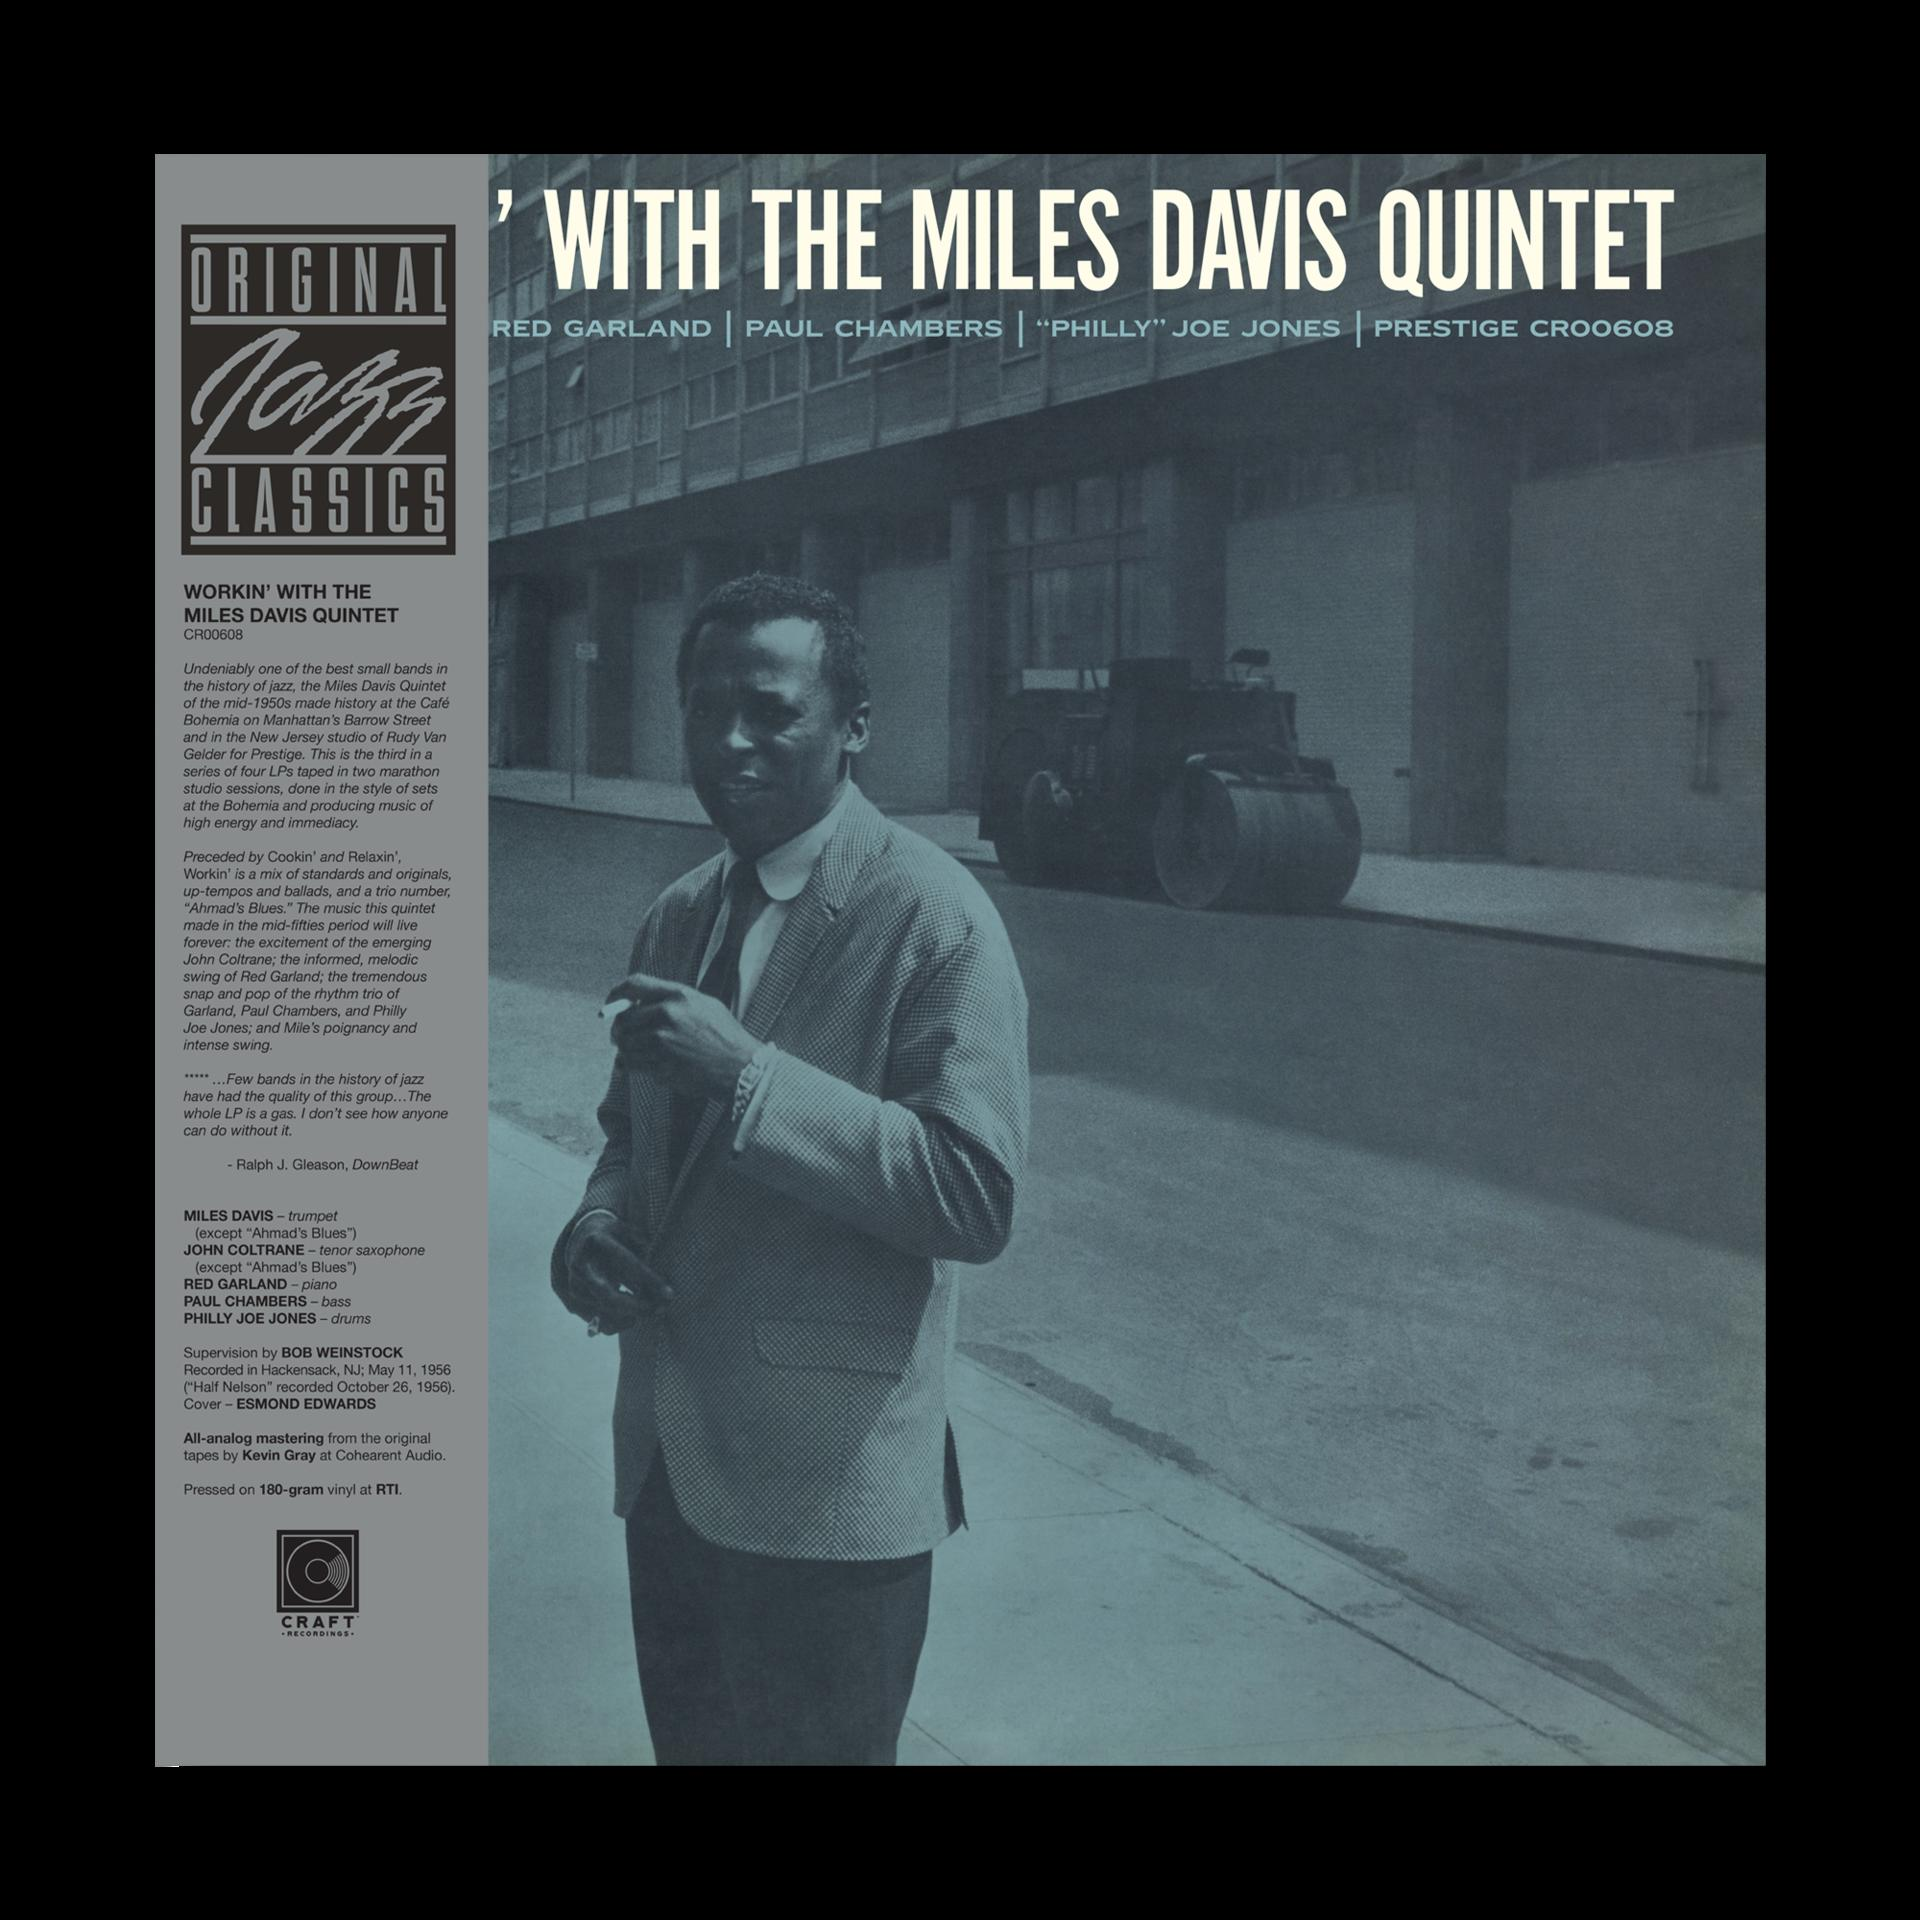 Quintet - The The Quintet Davis With Miles - Workin\' Miles Davis (Vinyl) (Vinyl)